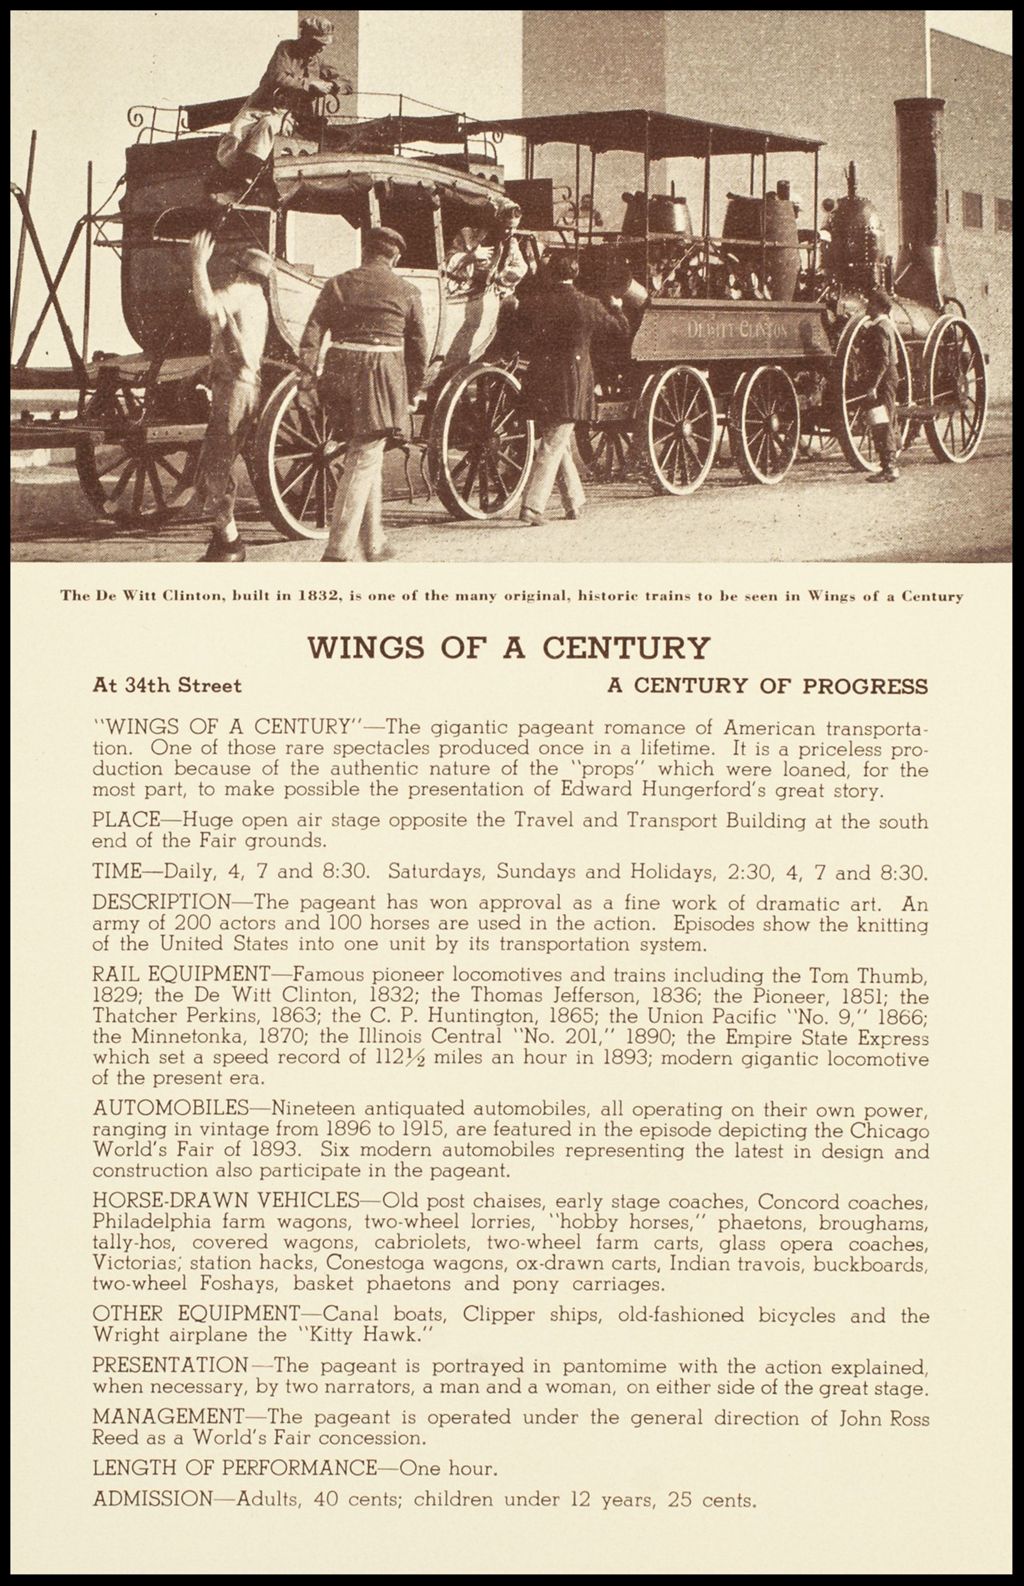 Miniature of Wings of a Century (Folder 16-253)